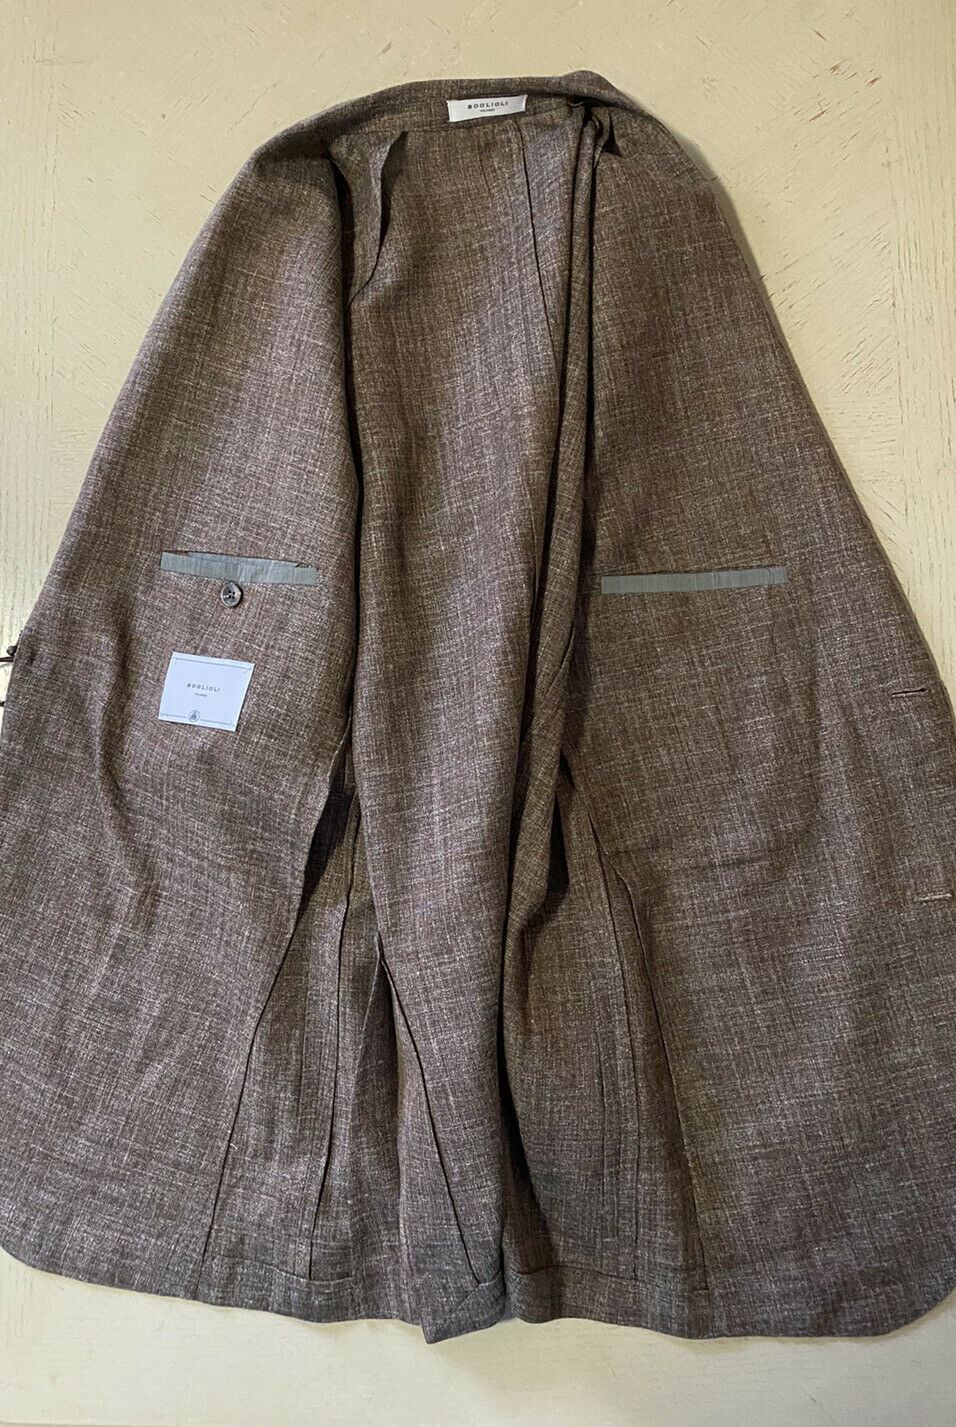 NWT $1475 Boglioli Men Tan Wool Blend Melange Jacket Blazer 42 US/52 Eu Italy